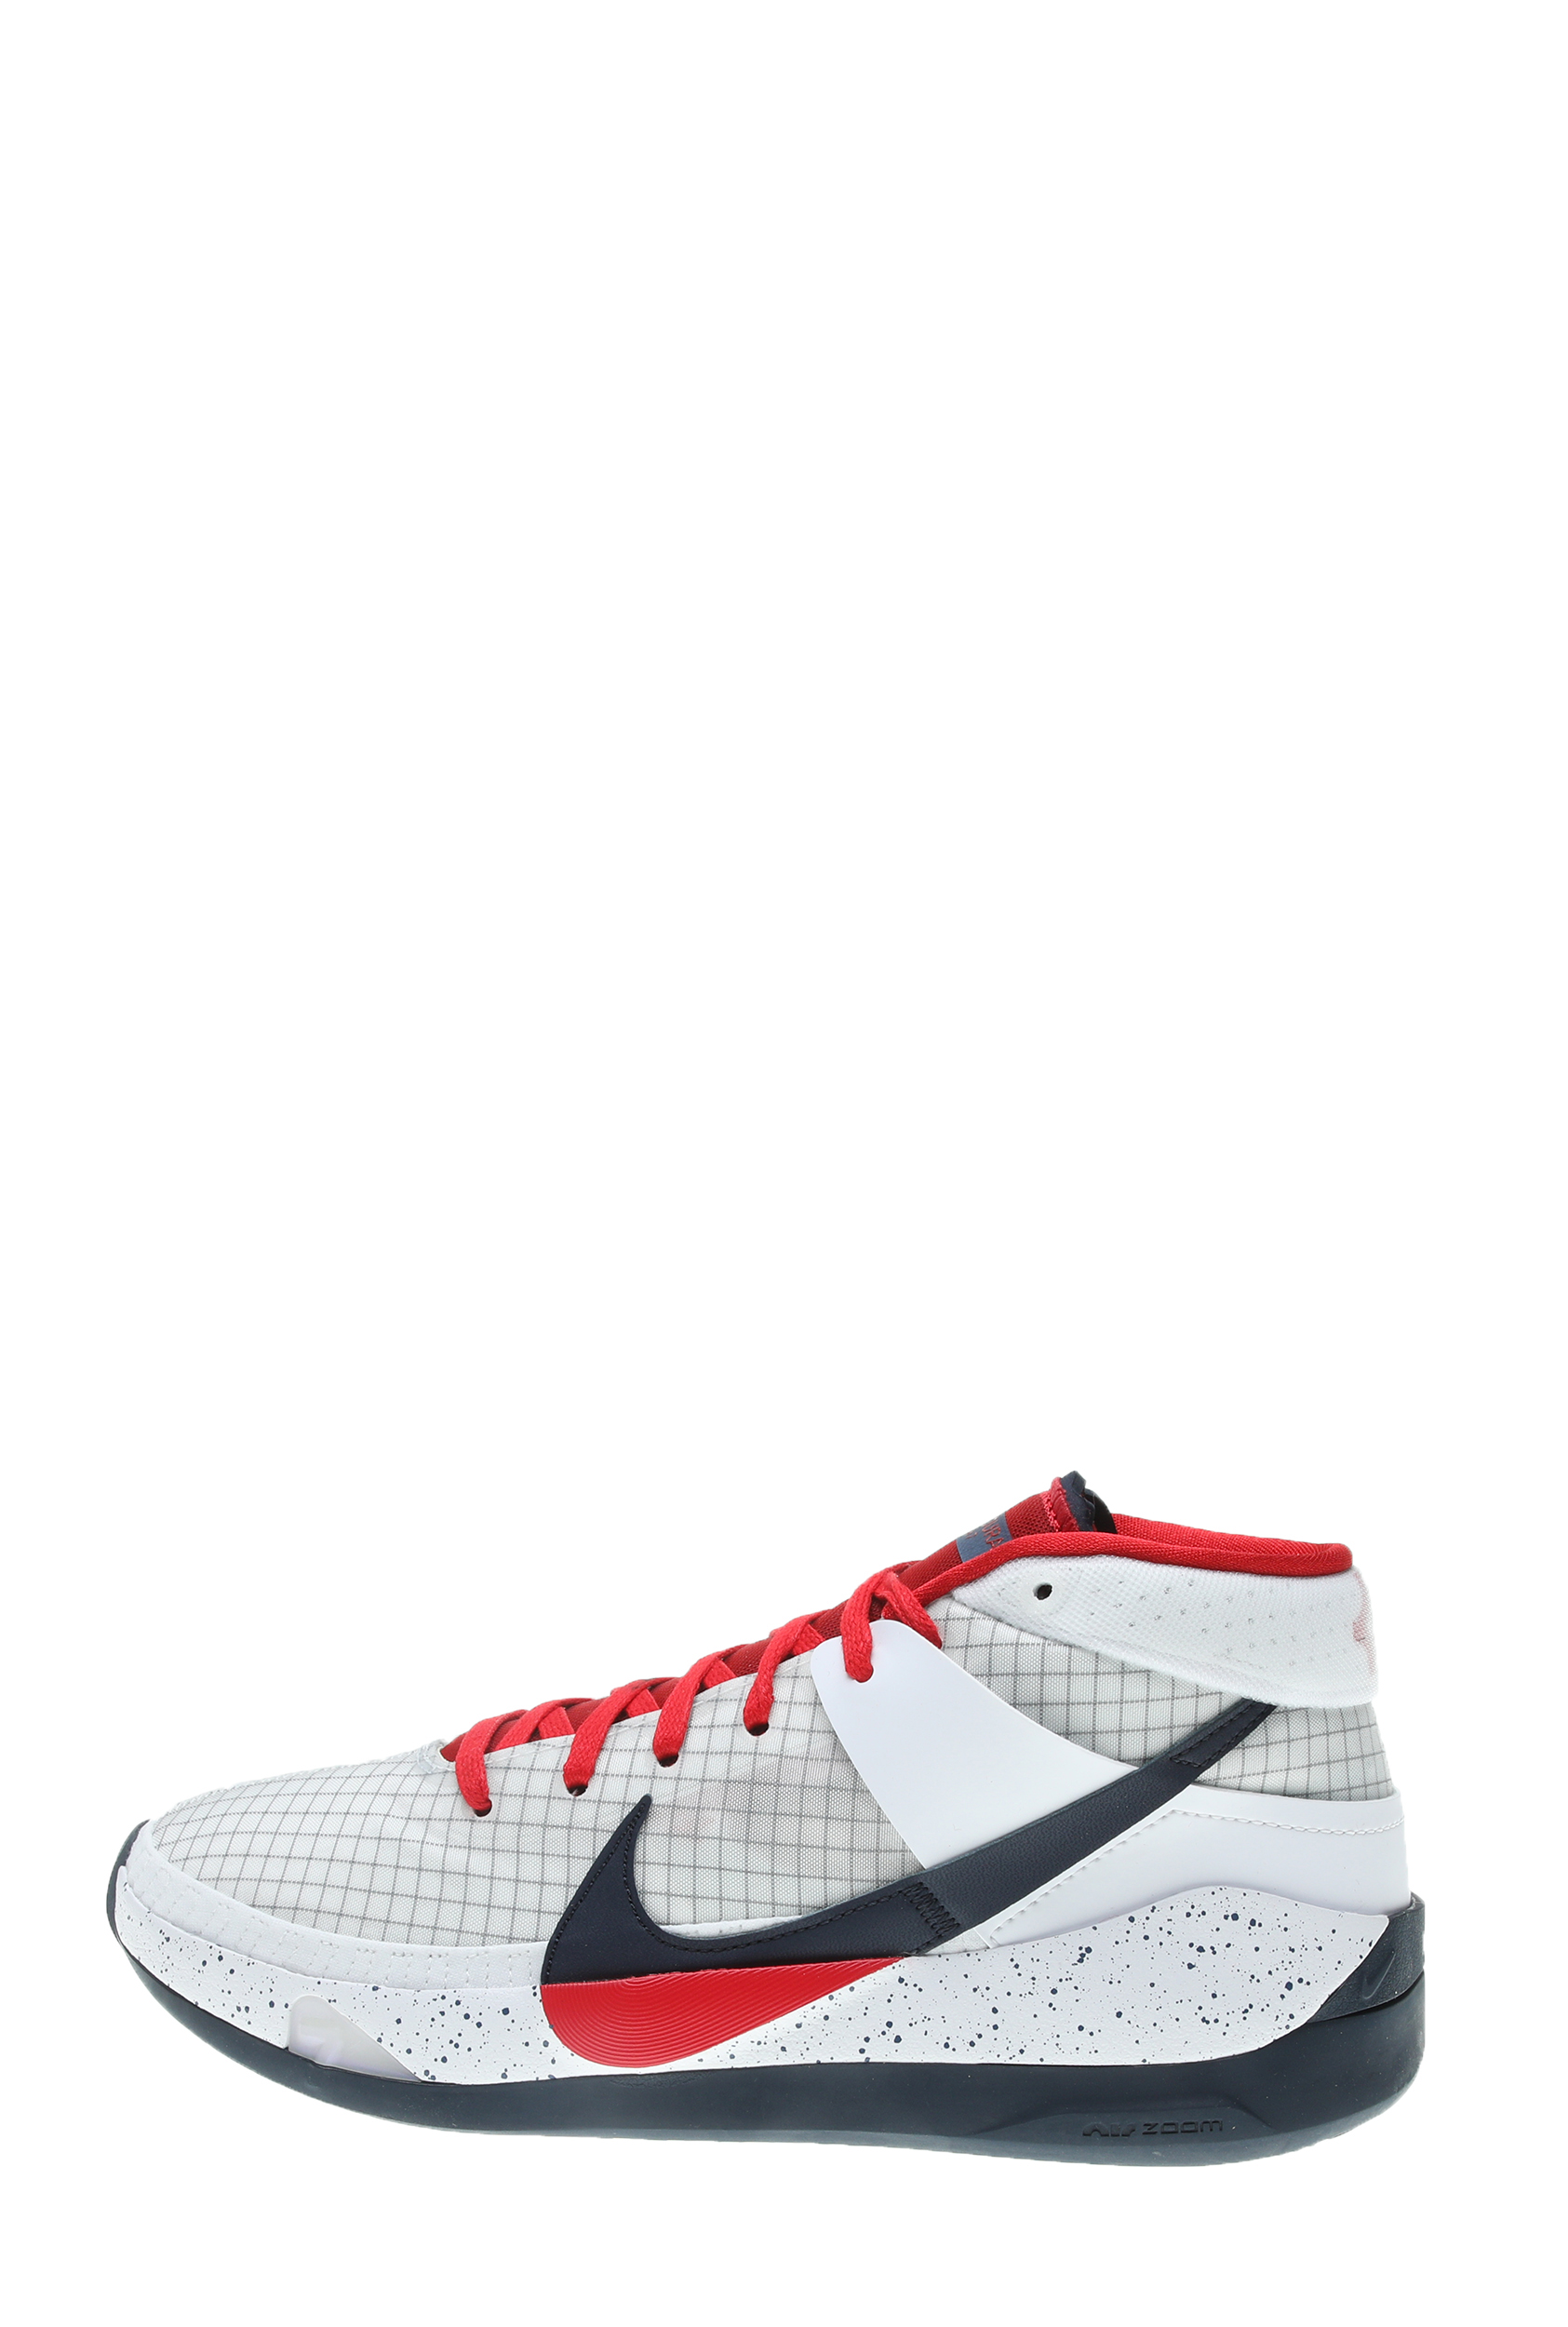 NIKE - Ανδρικά παπούτσια basketball ΝΙΚΕ KD13 λευκά Ανδρικά/Παπούτσια/Αθλητικά/Basketball